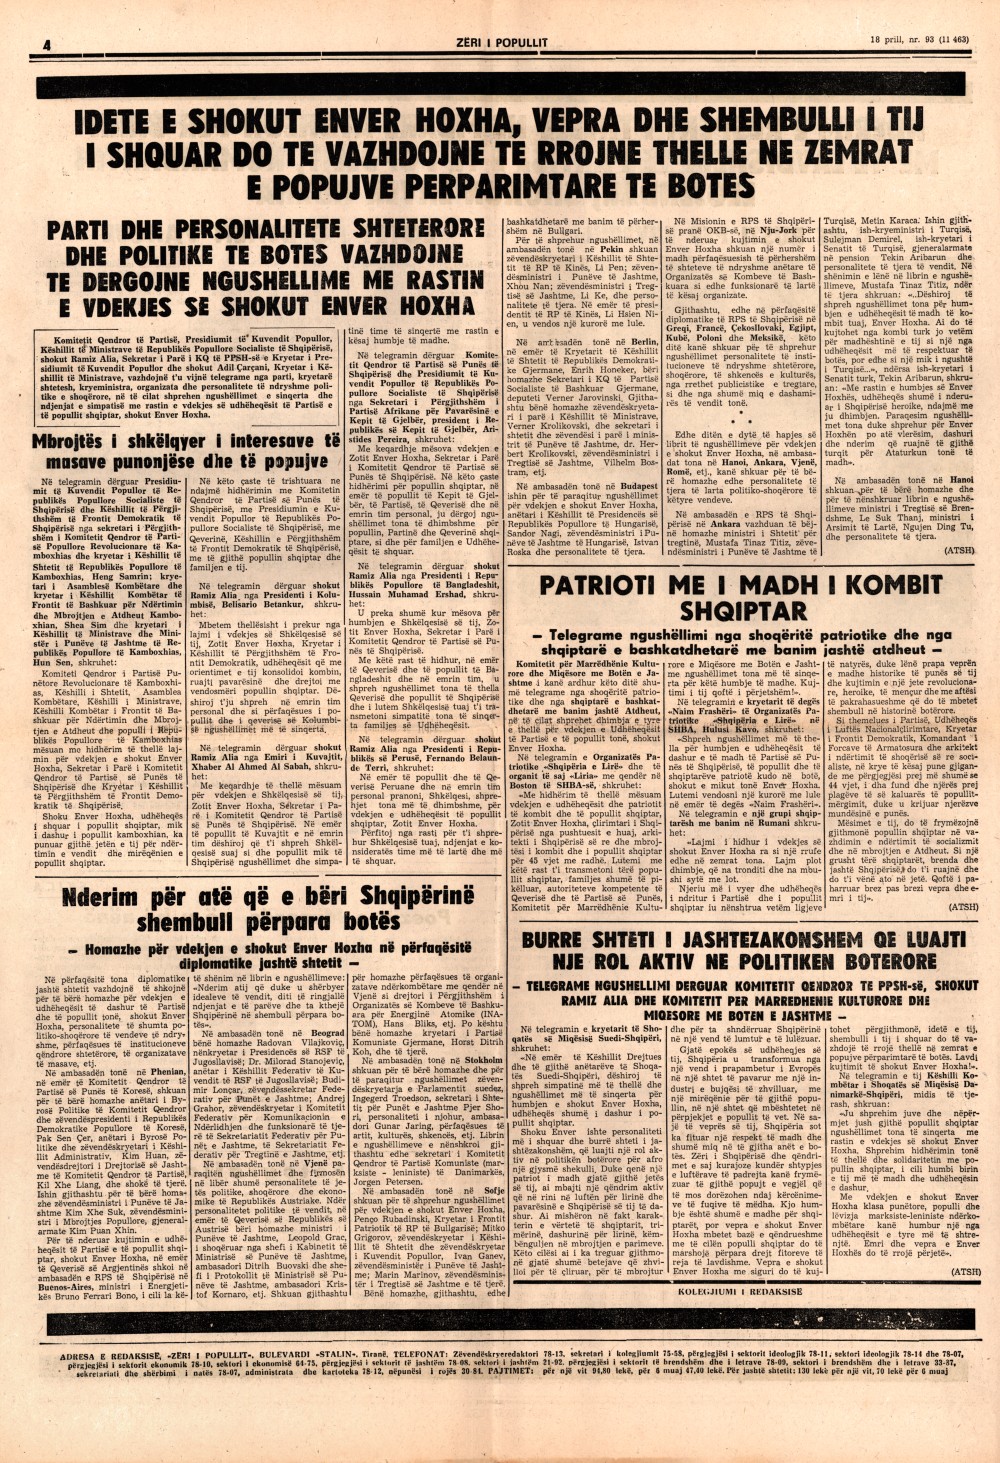 Газета "Зери и популлит" от 18 апреля 1985 года (четвертая полоса)